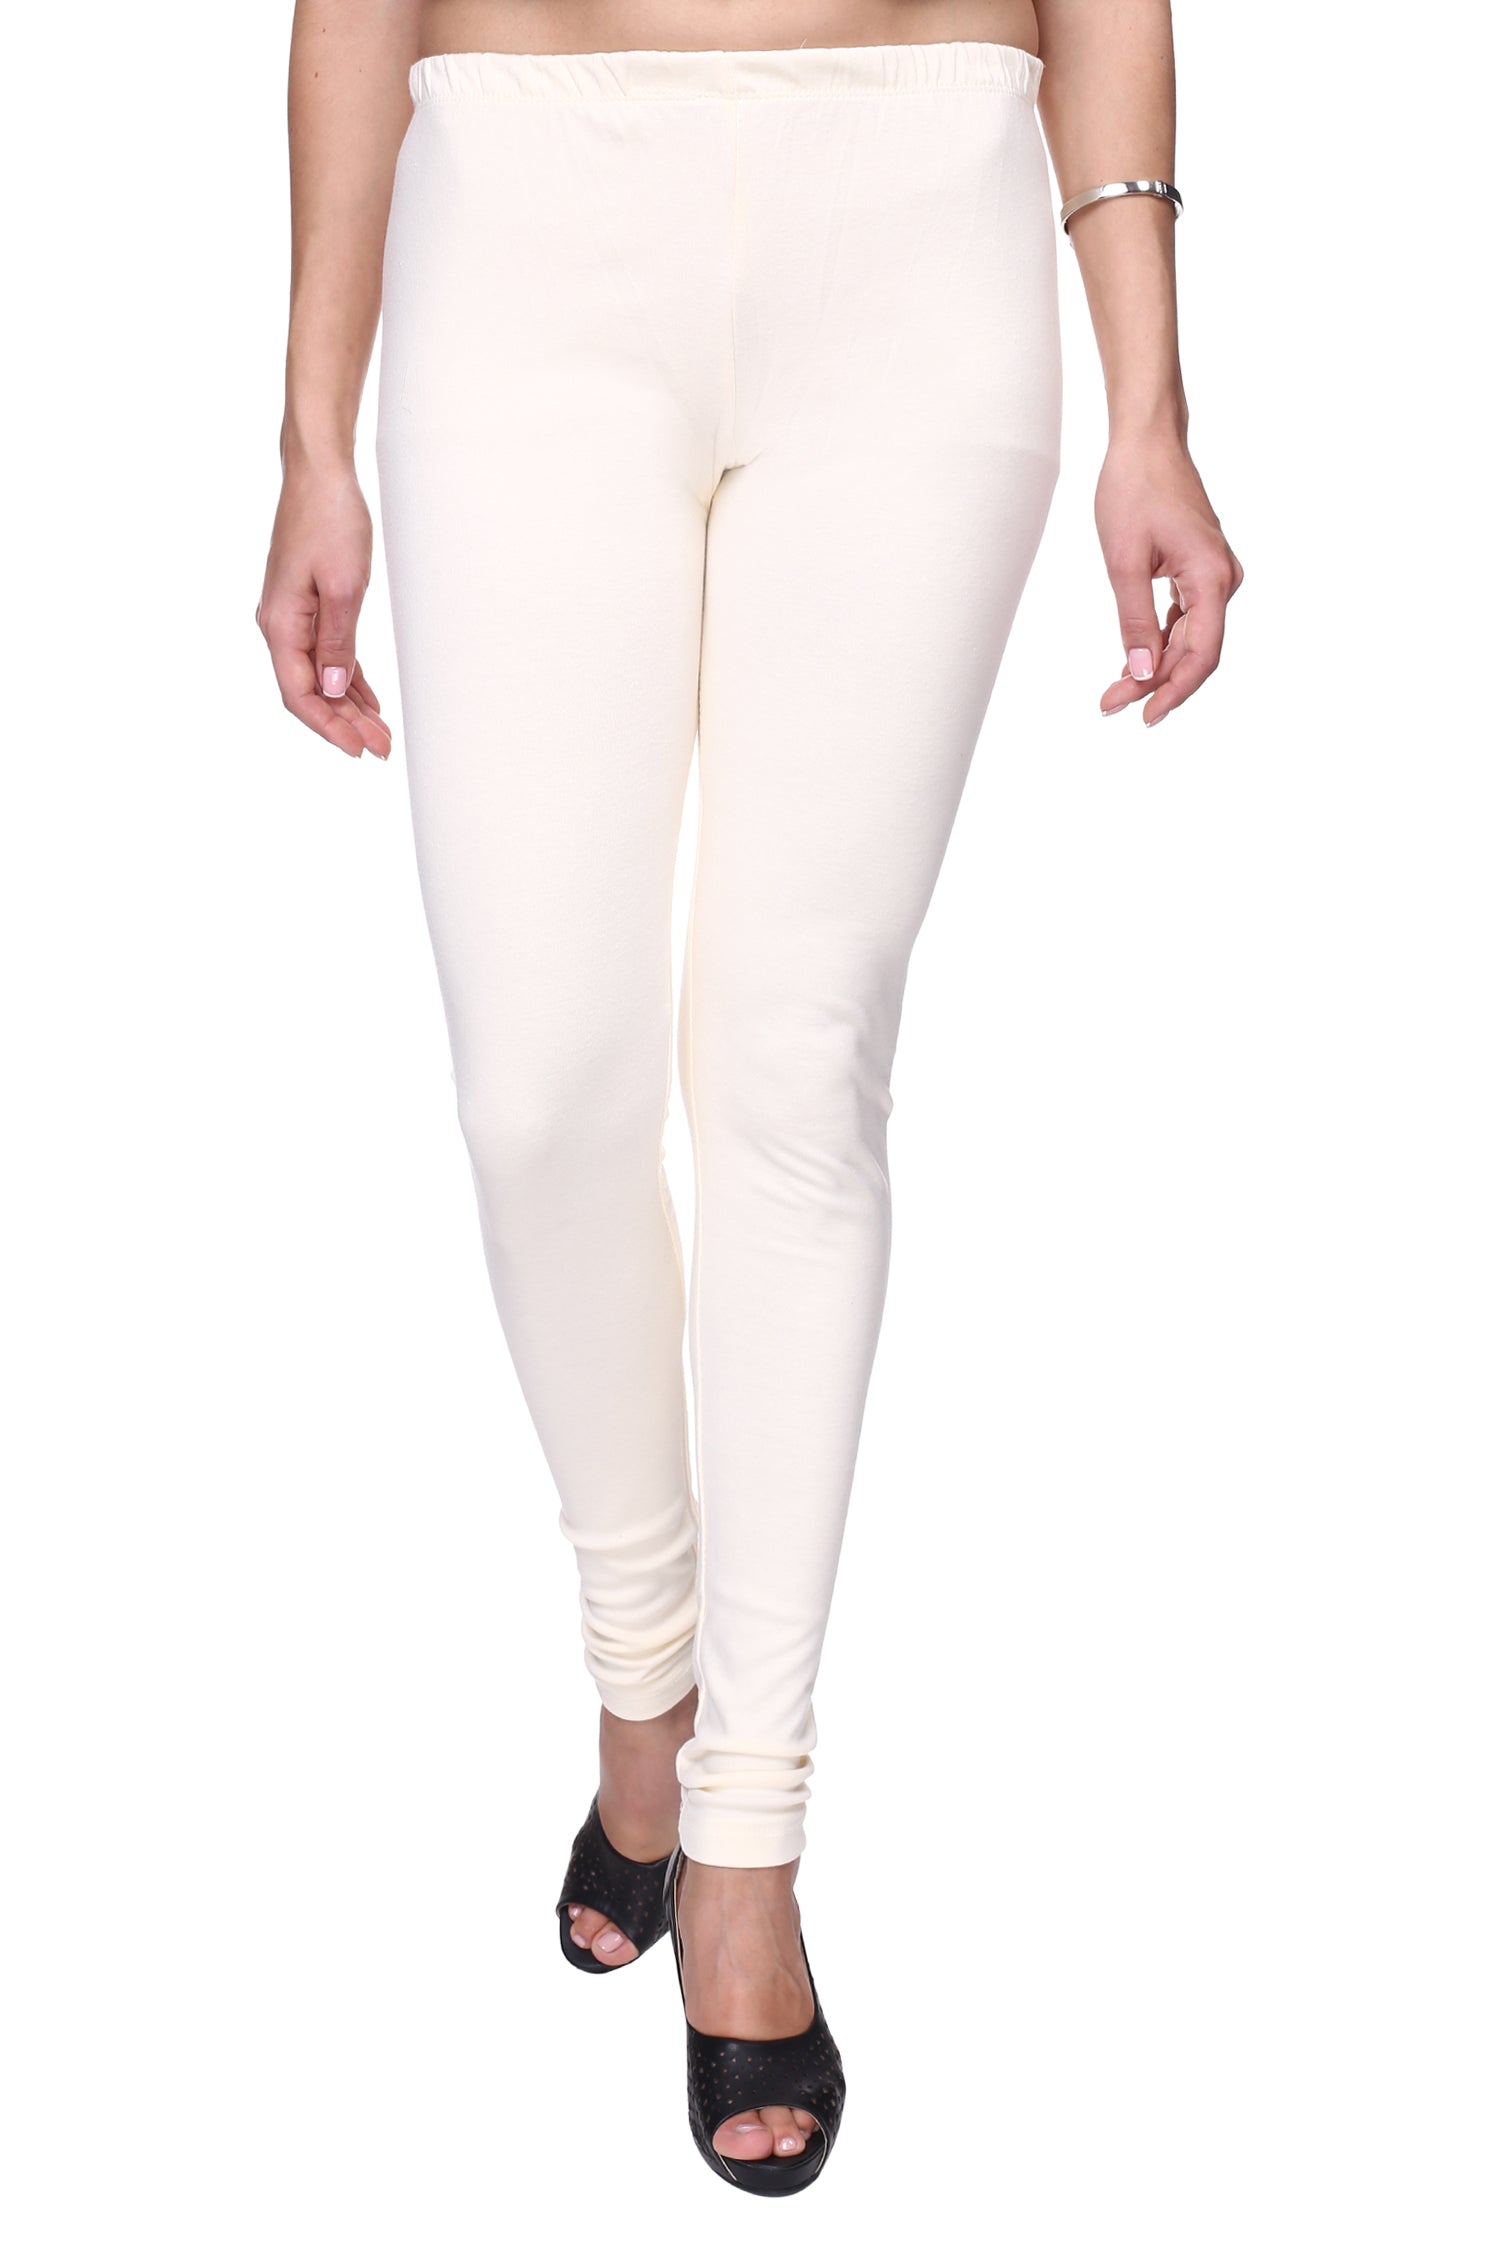 TRASA Women's Cotton Slim Fit Churidar Leggings - Off-White